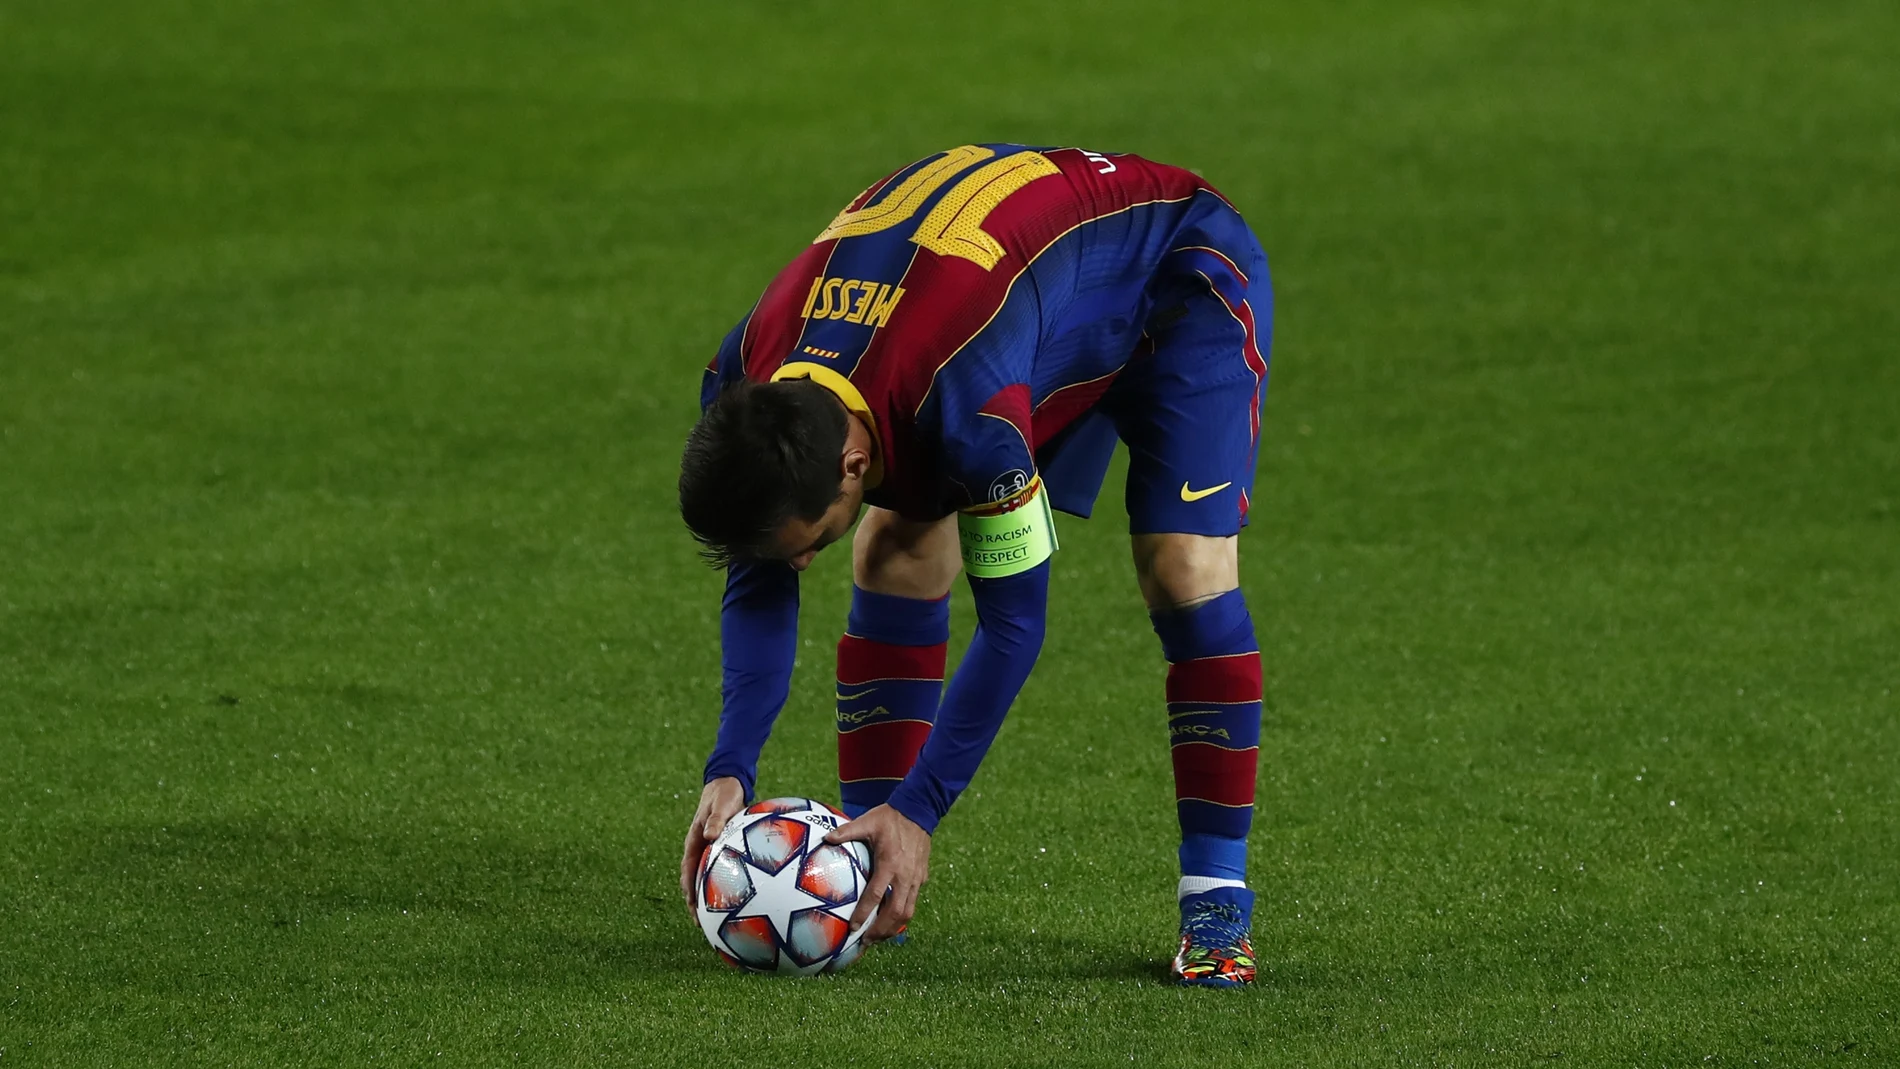 El último gol de Messi en la Champions ha sido de penalti